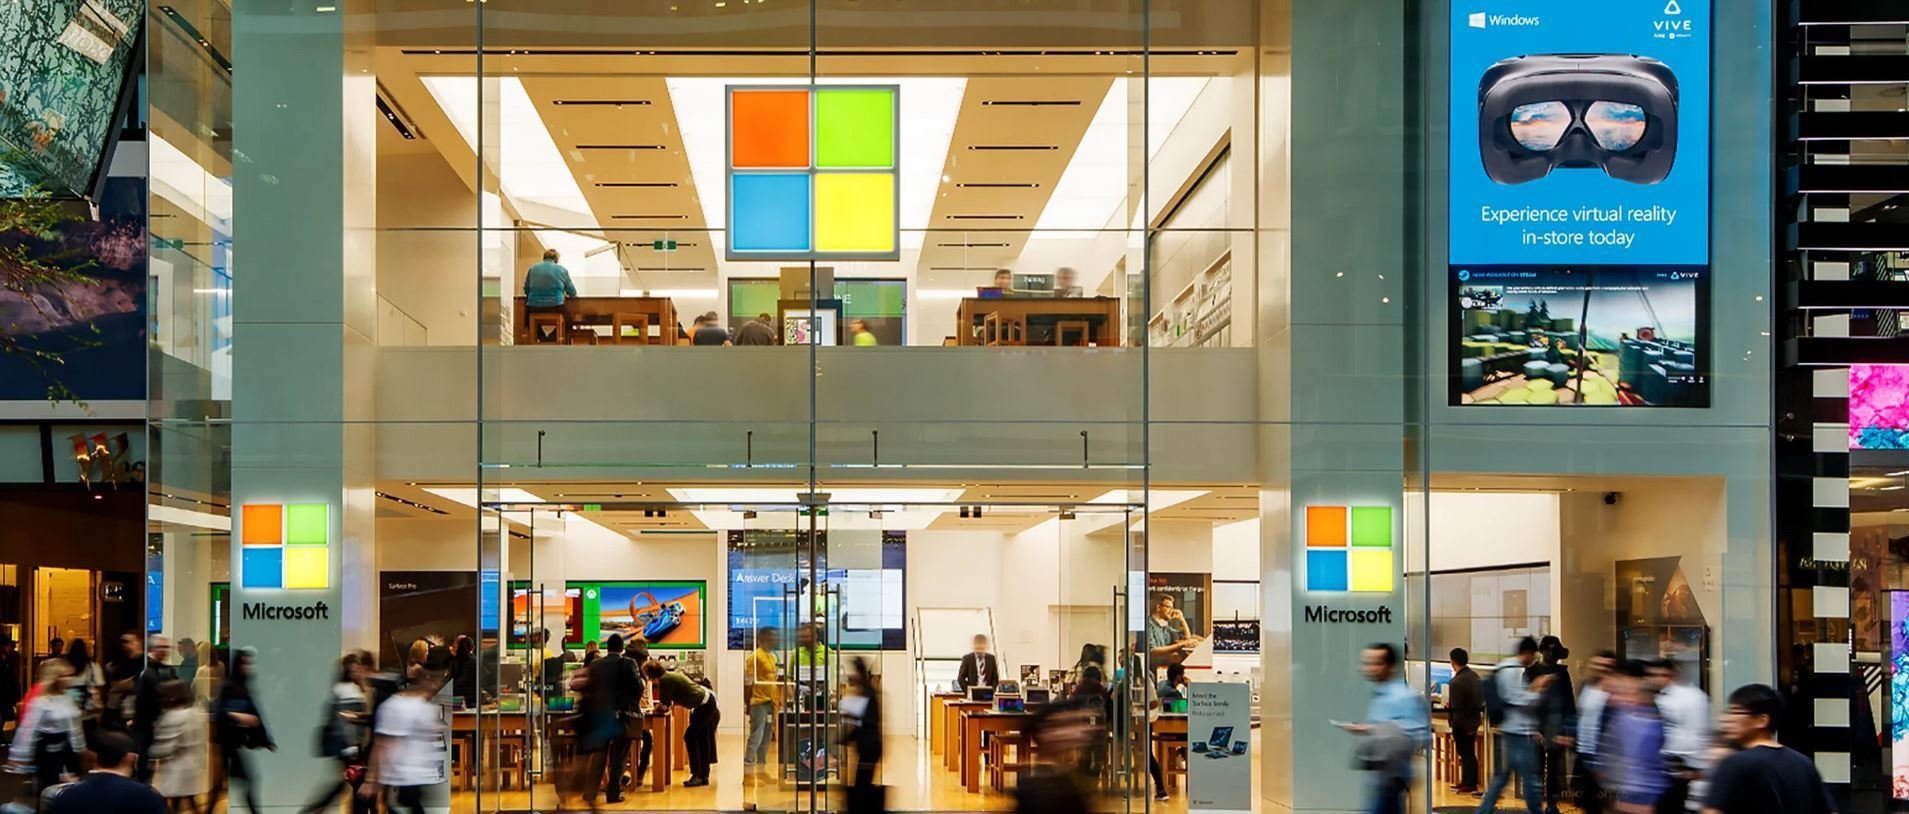 Microsoft gives up on brick-and-mortar retail